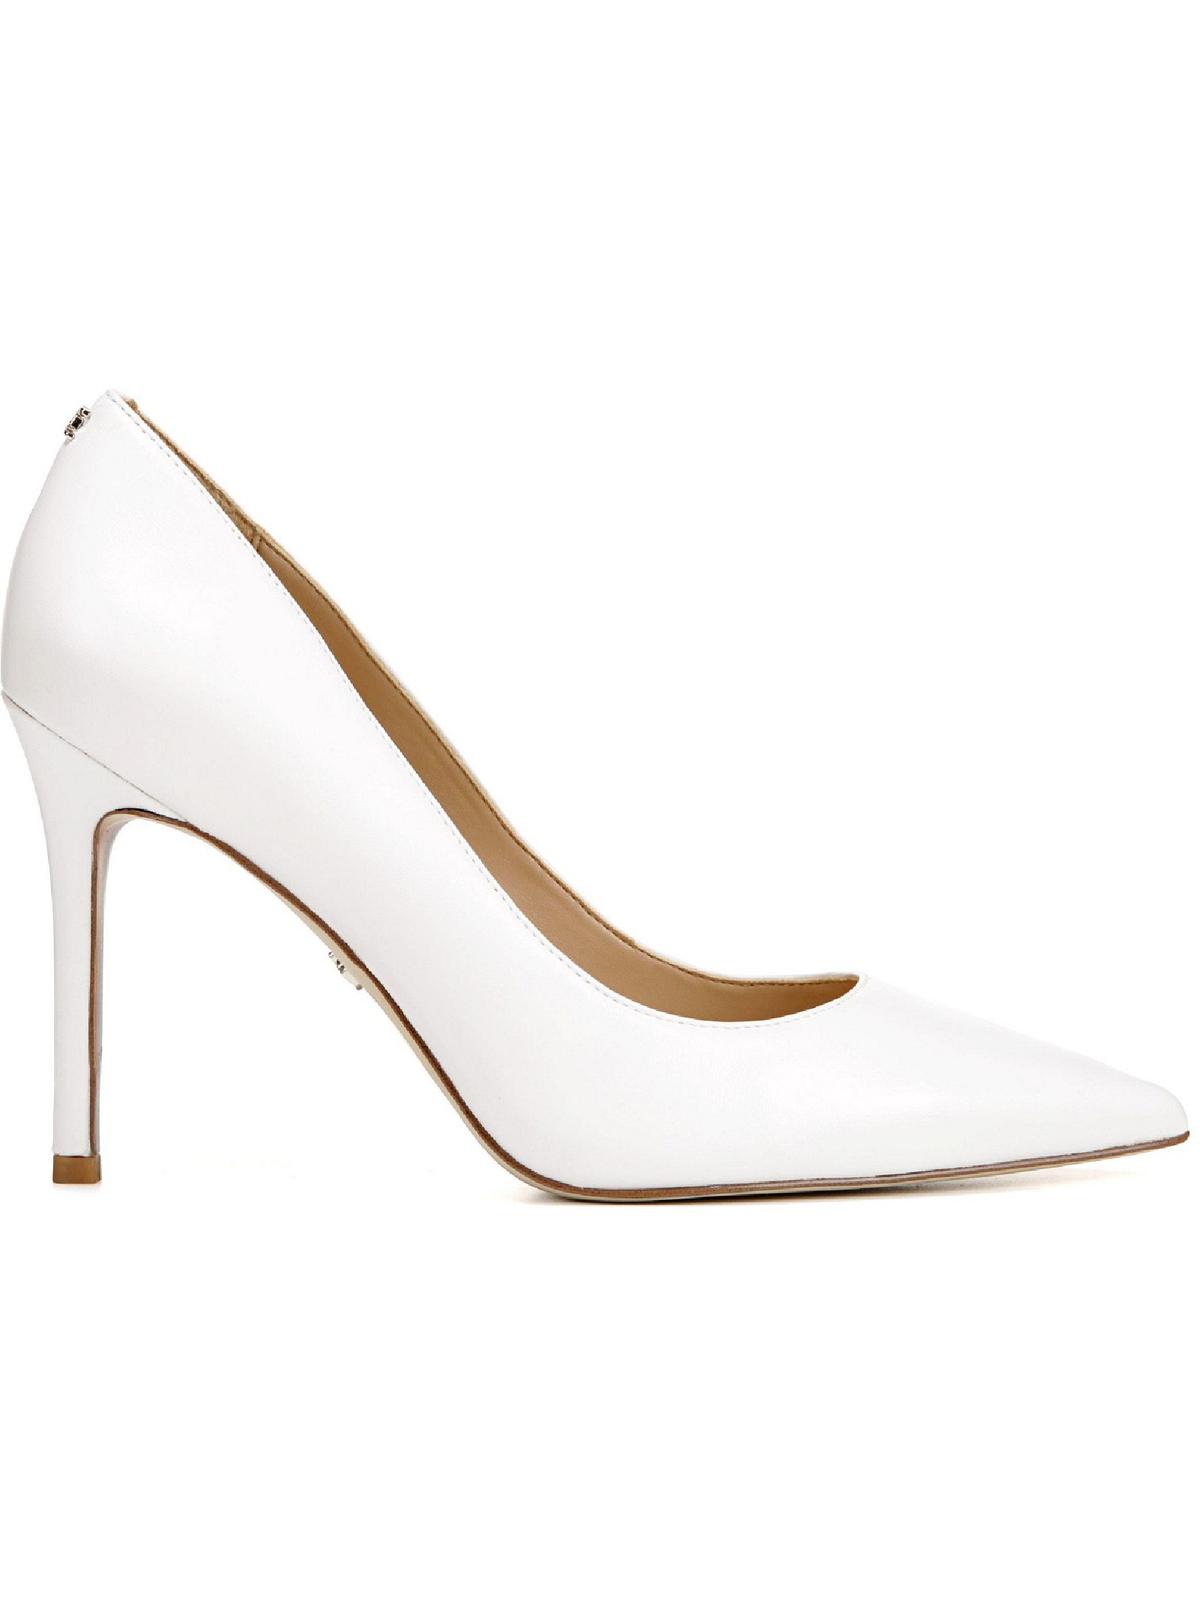 Sam Edelman Womens Hazel Leather Heels Pumps White 6 Medium (B,M) - image 2 of 3